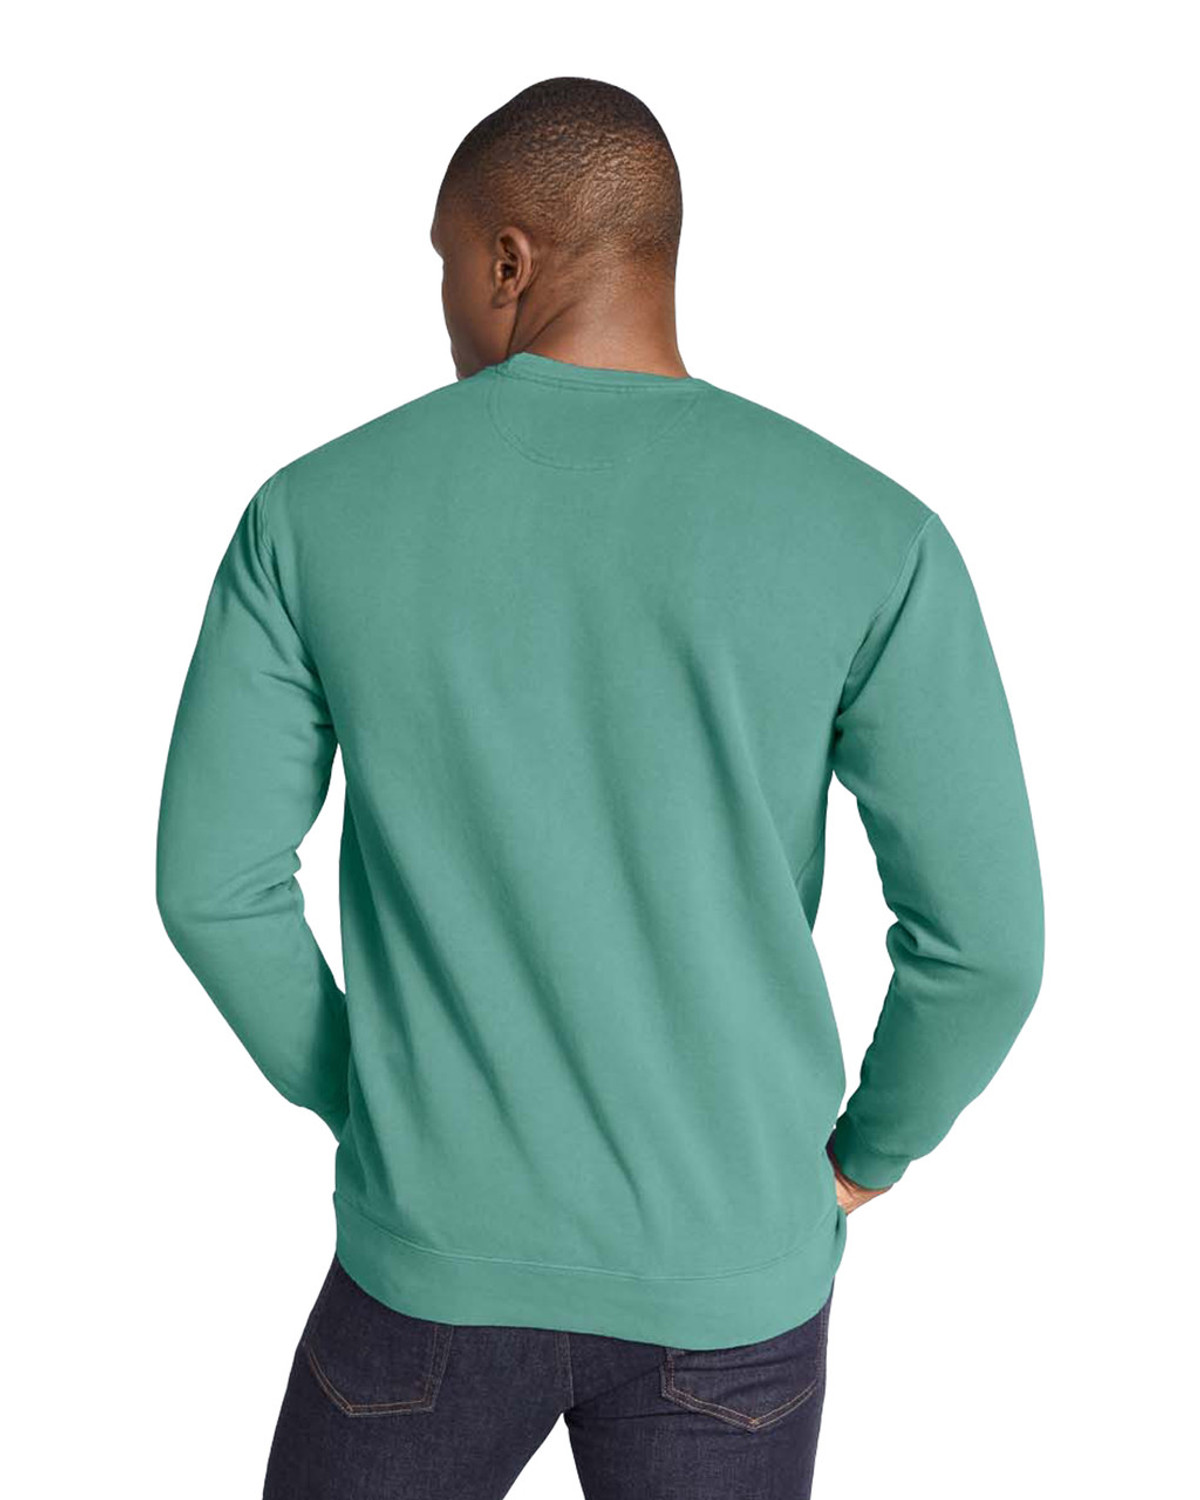 Browse Comfort Colors - Hoodies & Sweatshirts Collection